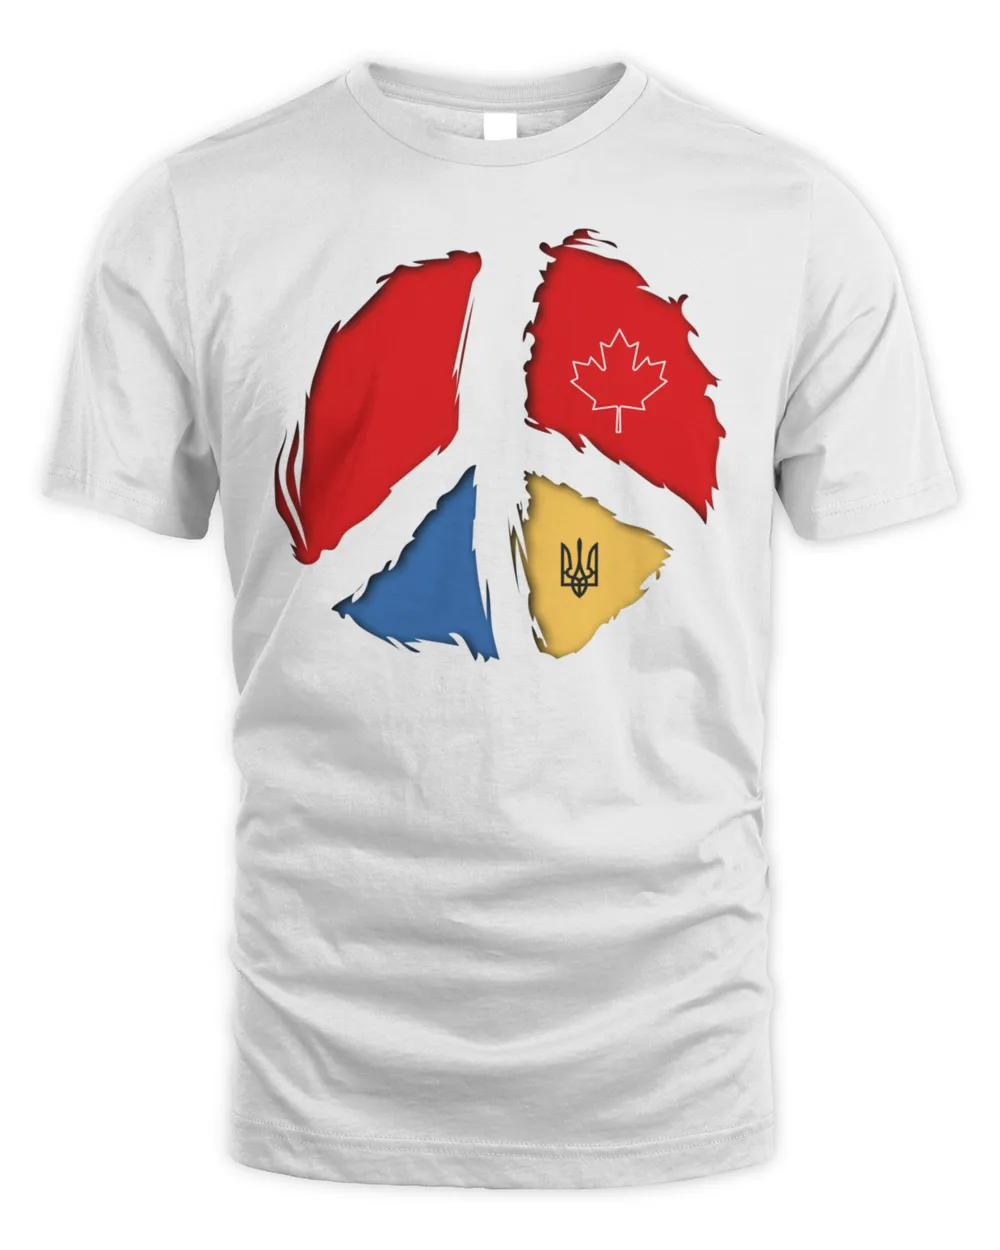 CANADA UKRAINE - PEACE UKRAINE - FREE UKRAINE - UKRAINIAN COLORS Classic T-Shirt